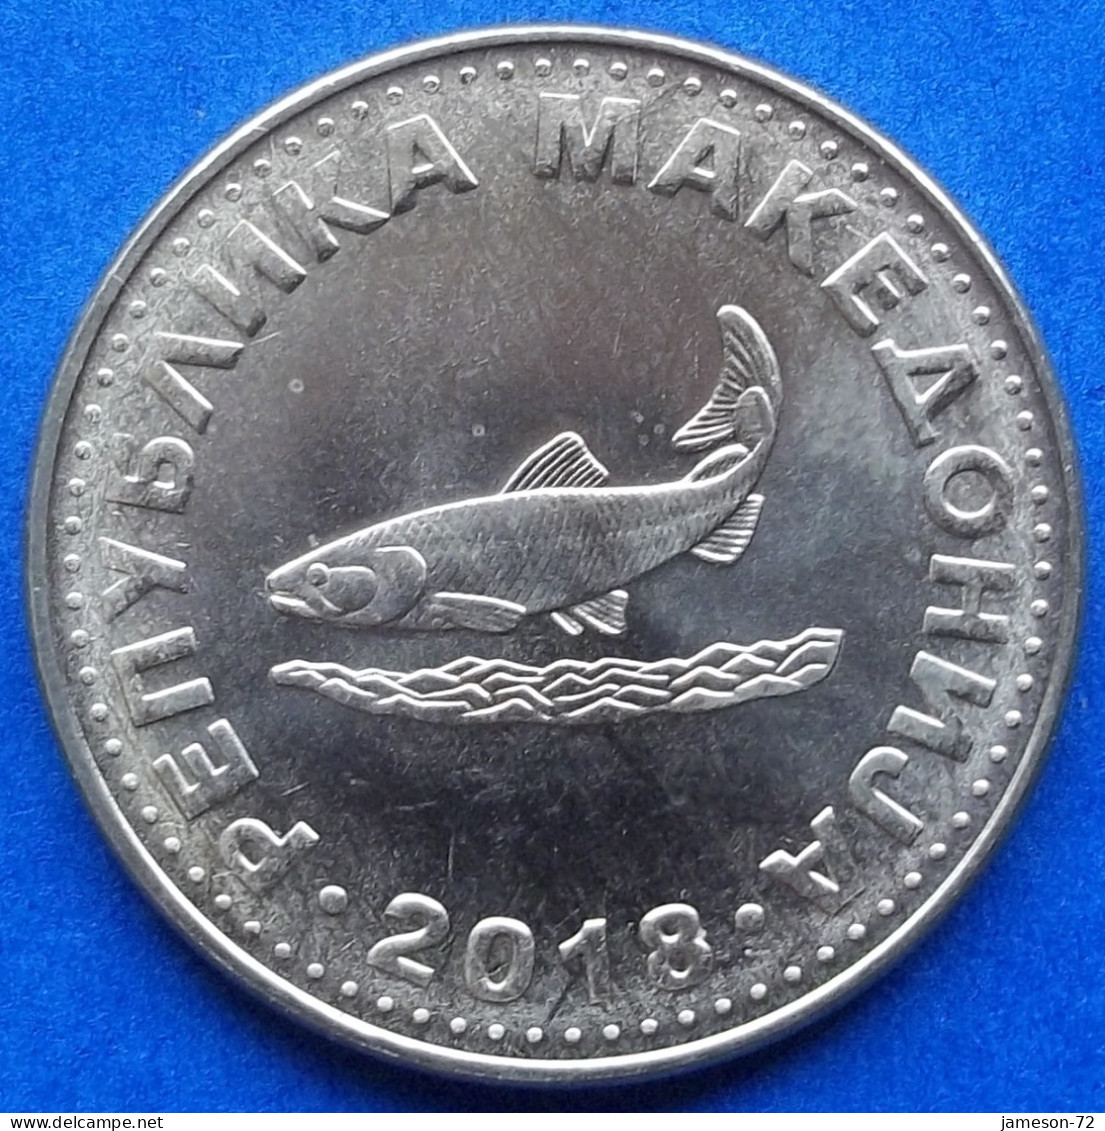 MACEDONIA - 2 Denari 2018 "Trout" KM# 3a Republic (1991) - Edelweiss Coins - Nordmazedonien